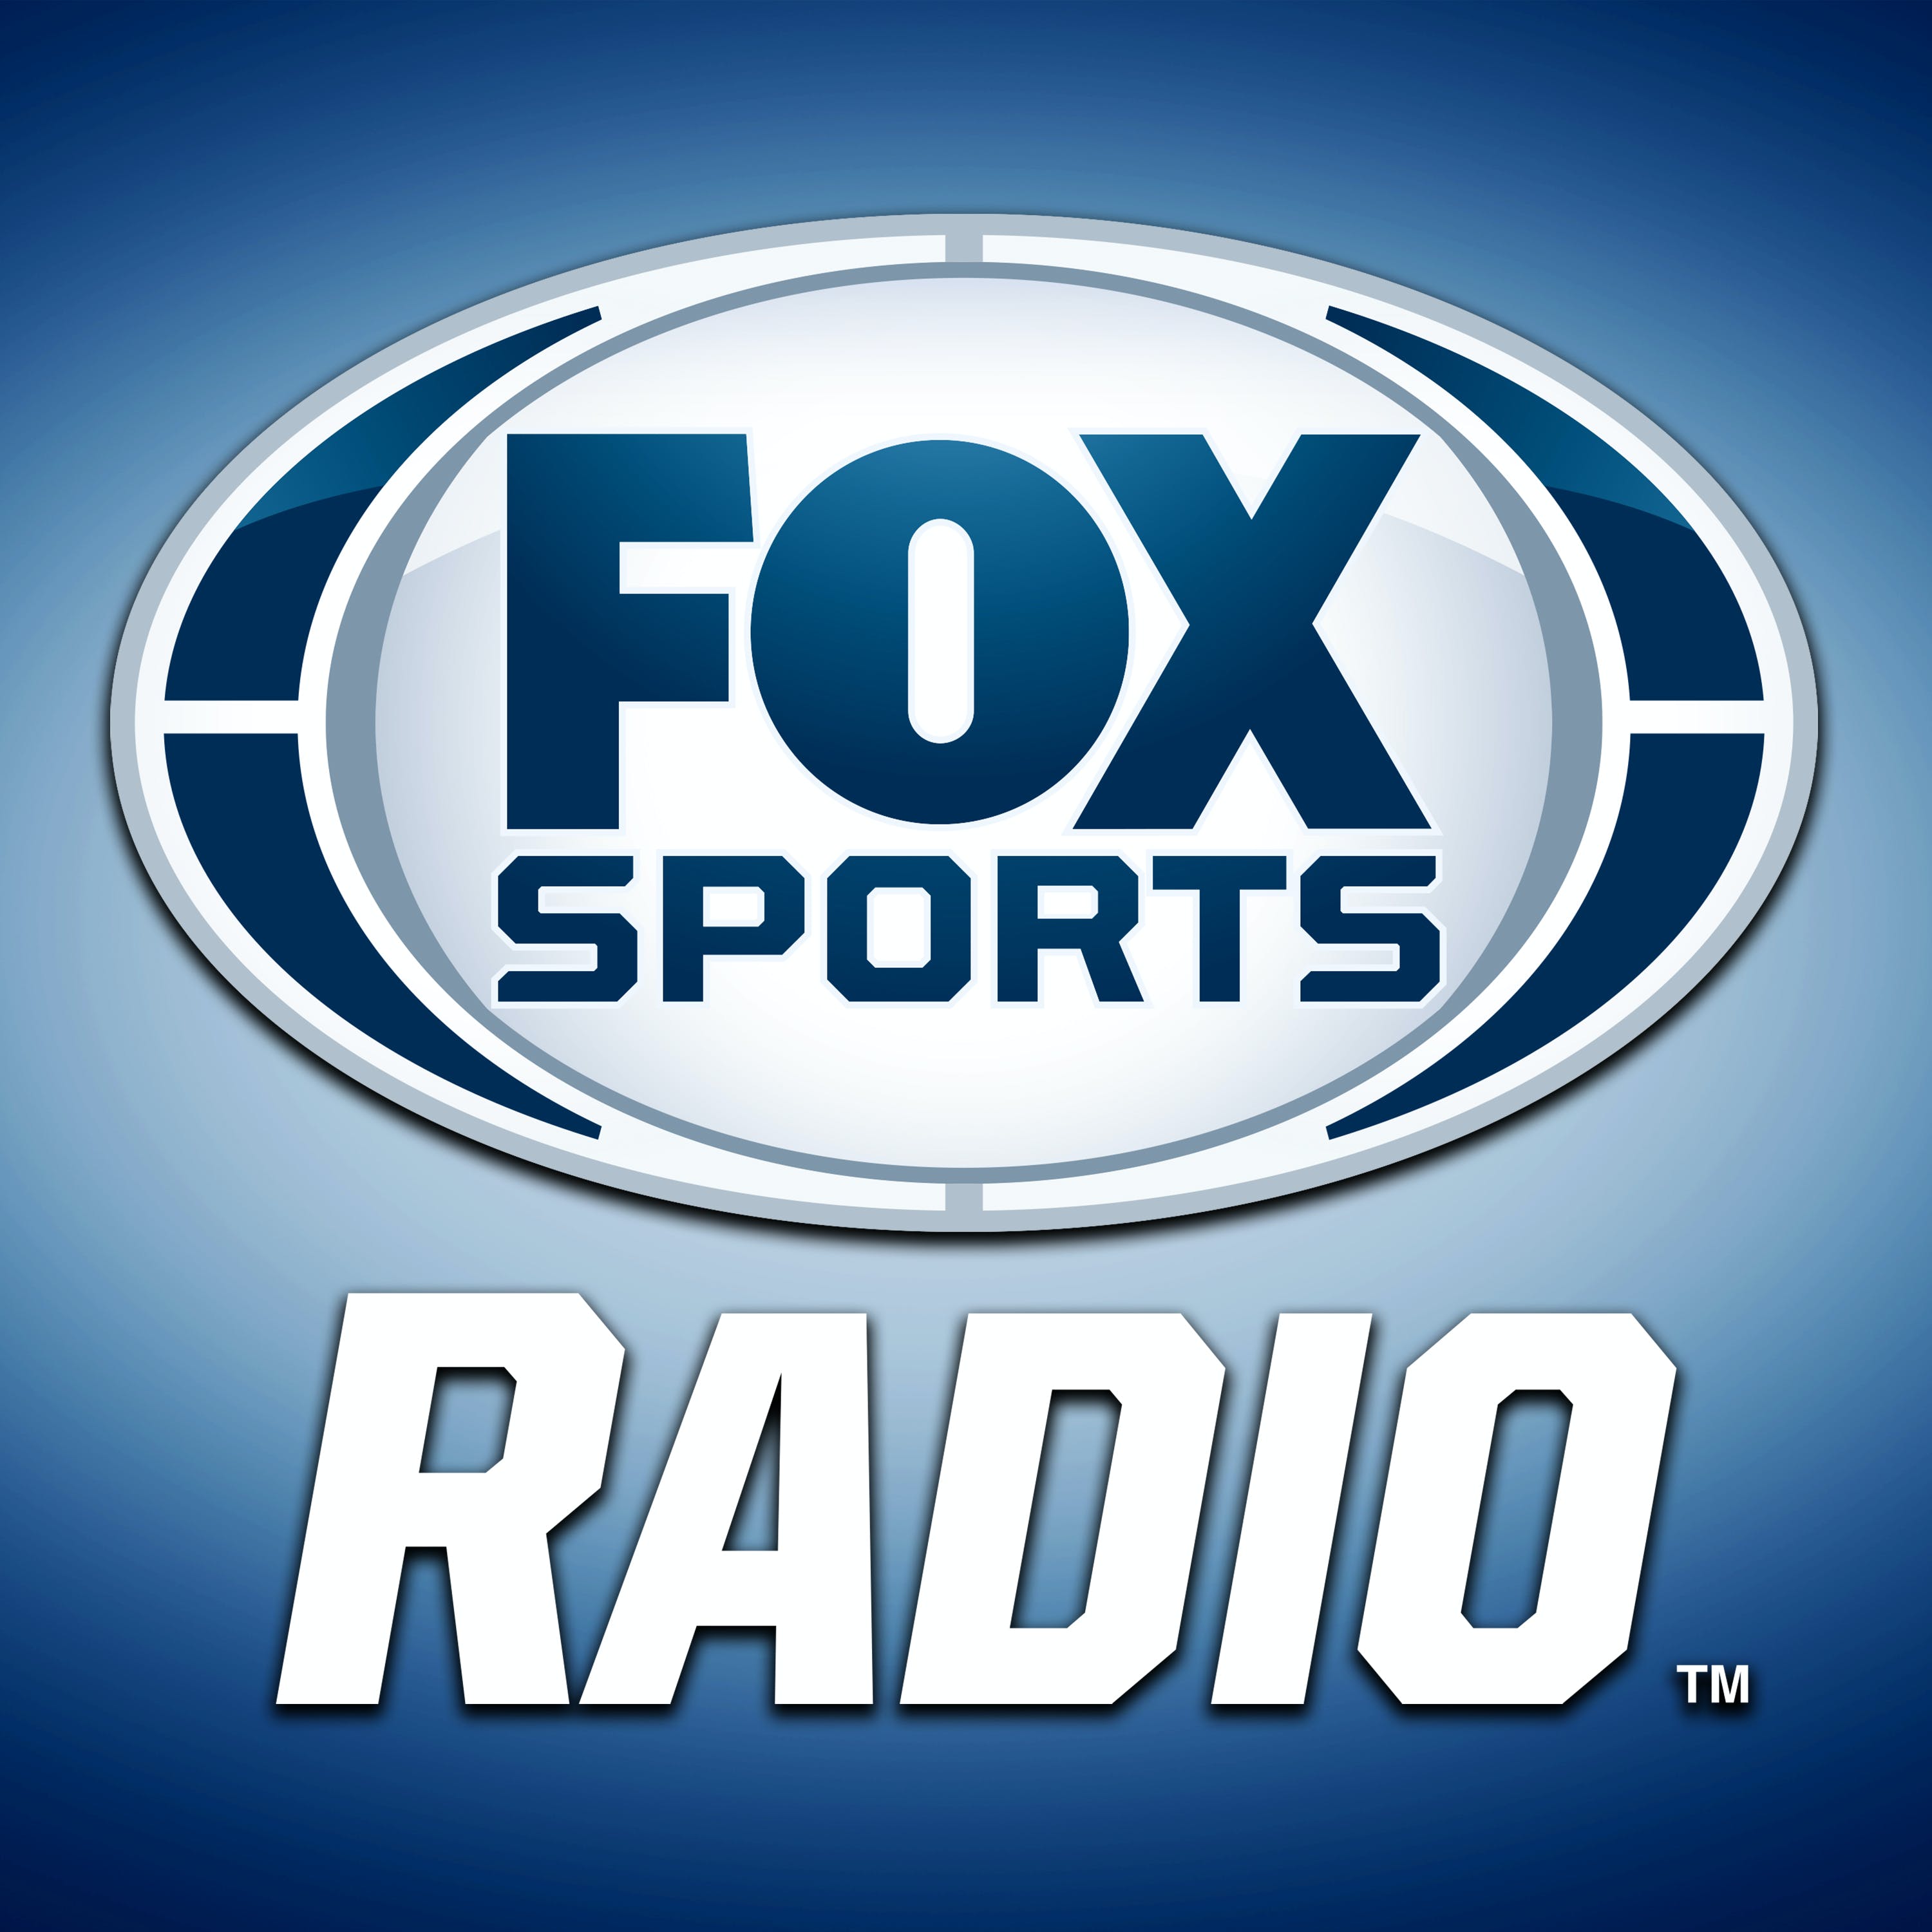 05/15/2021 - FOX Sports Saturday with Steve Hartman and Ryan Hollins